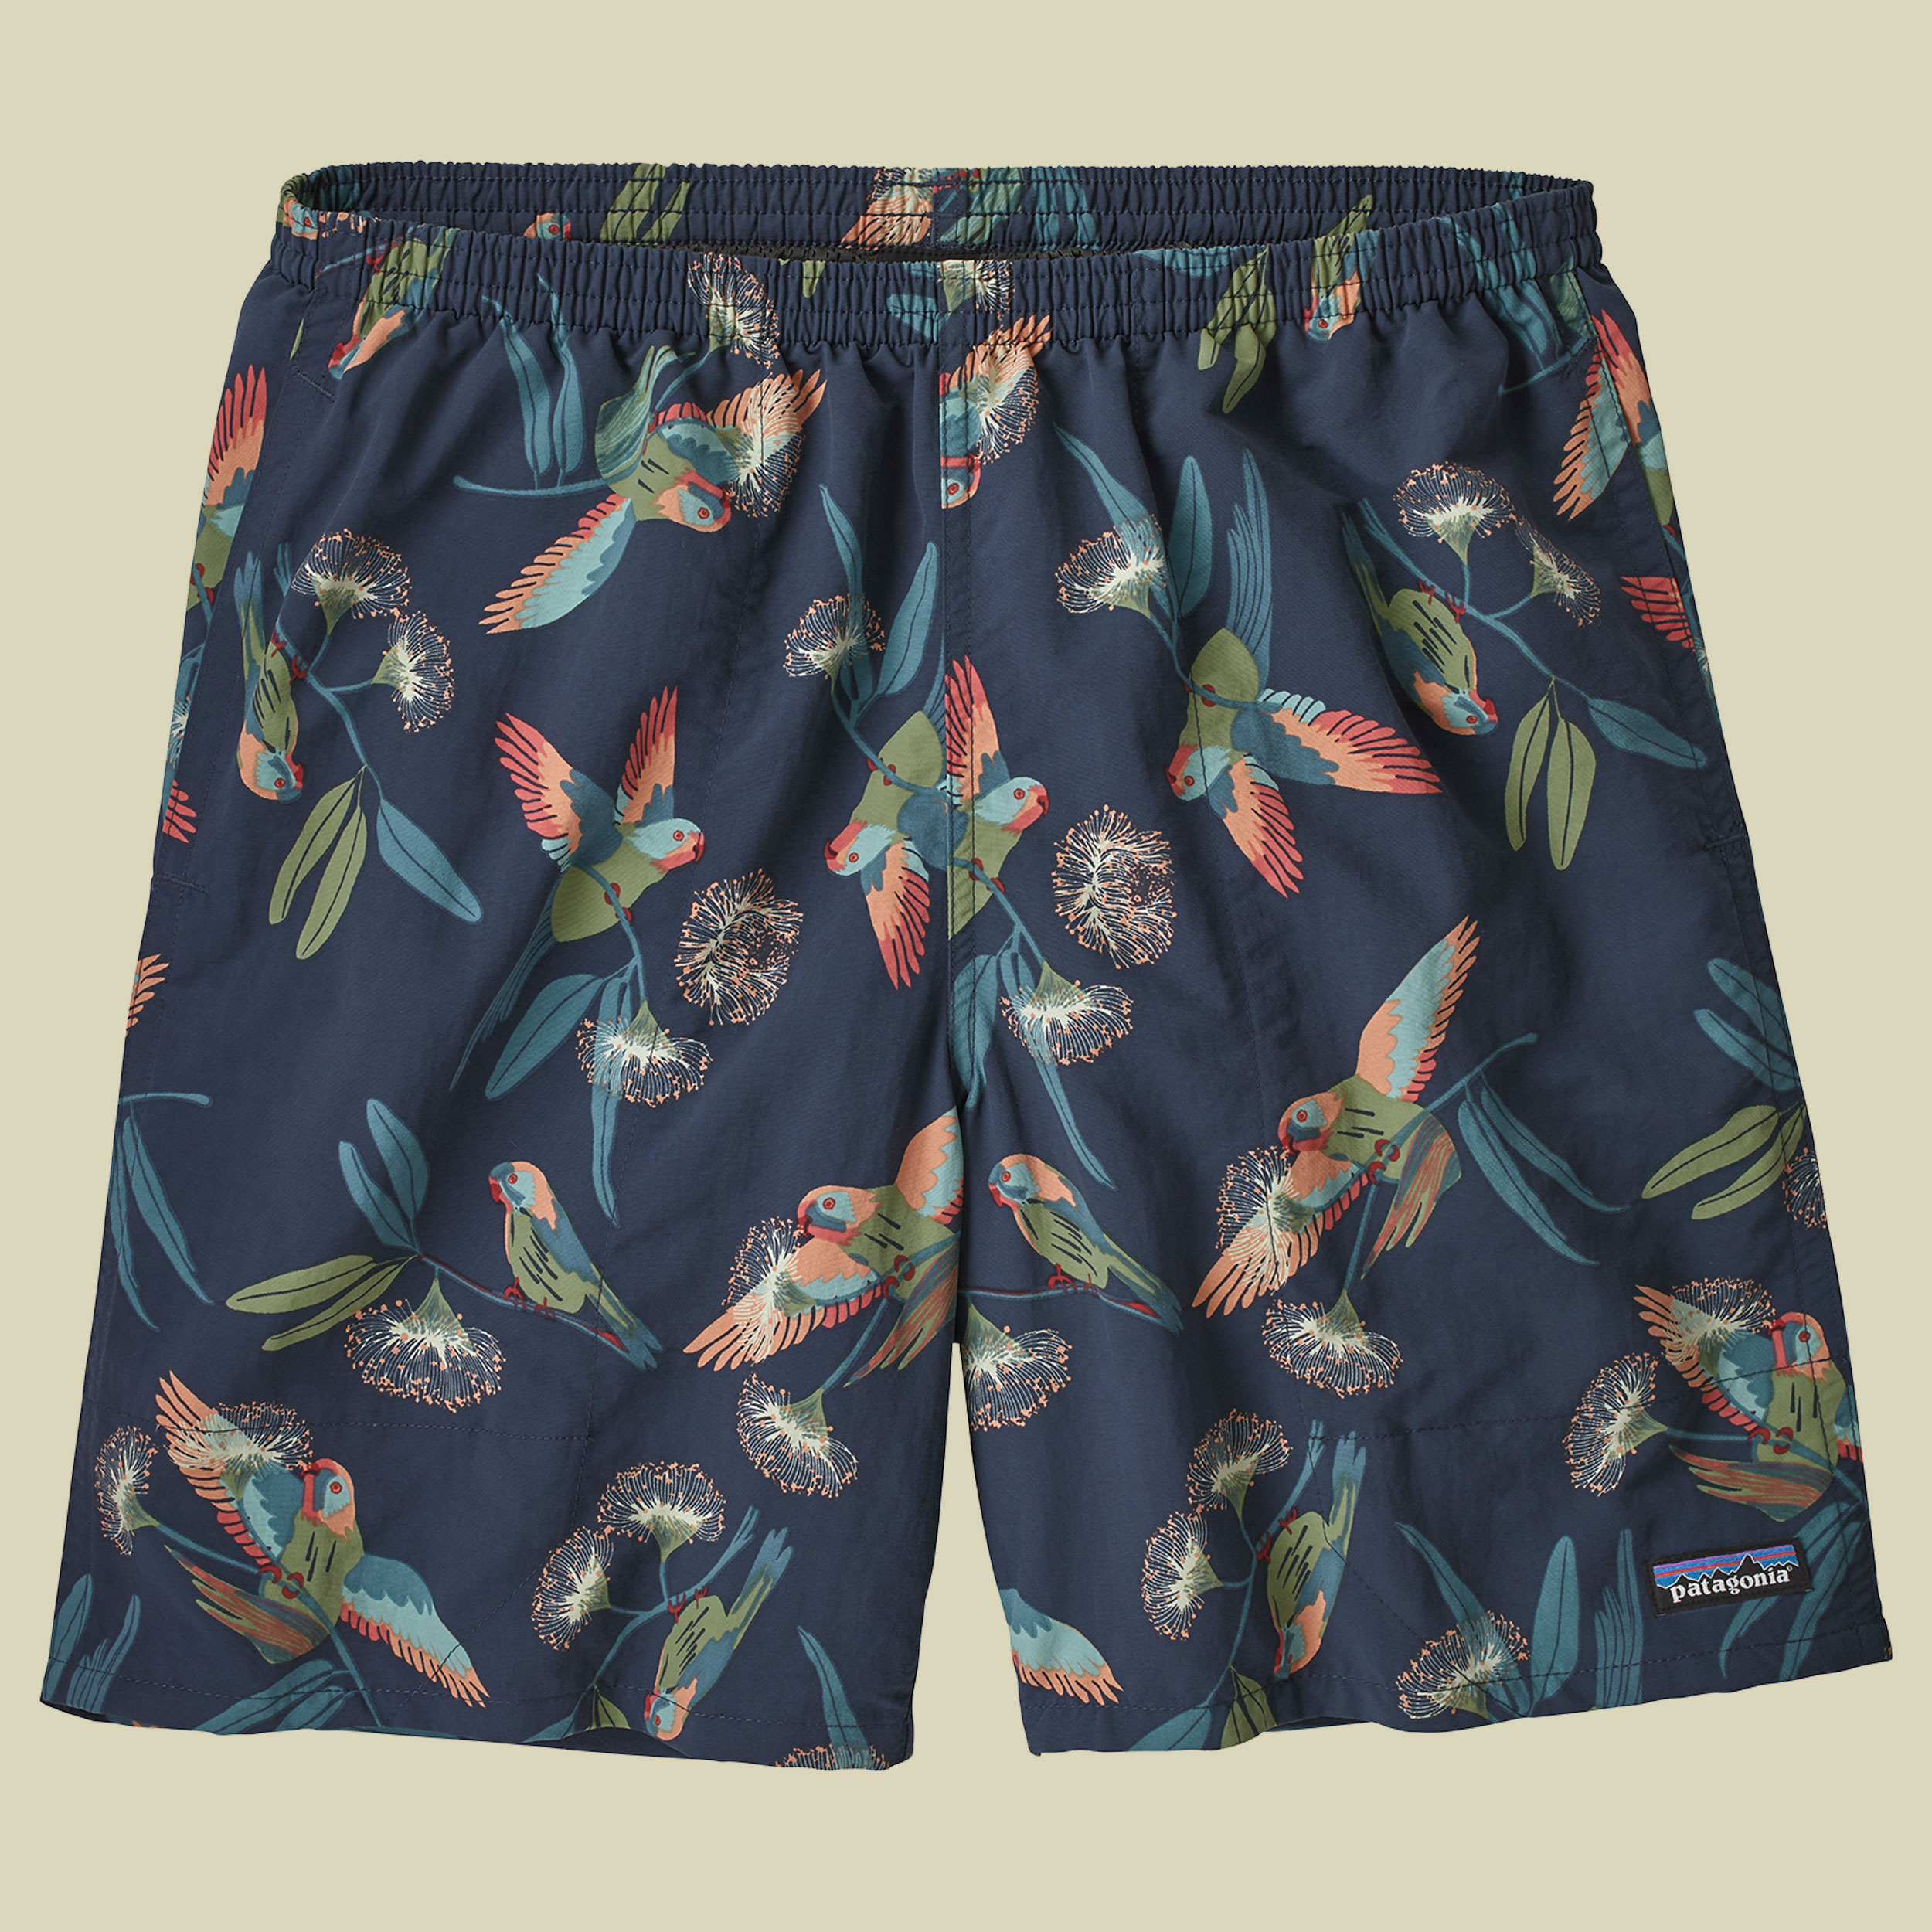 Baggies Longs 7“ Shorts Men Größe XL Farbe parrots/stone blue